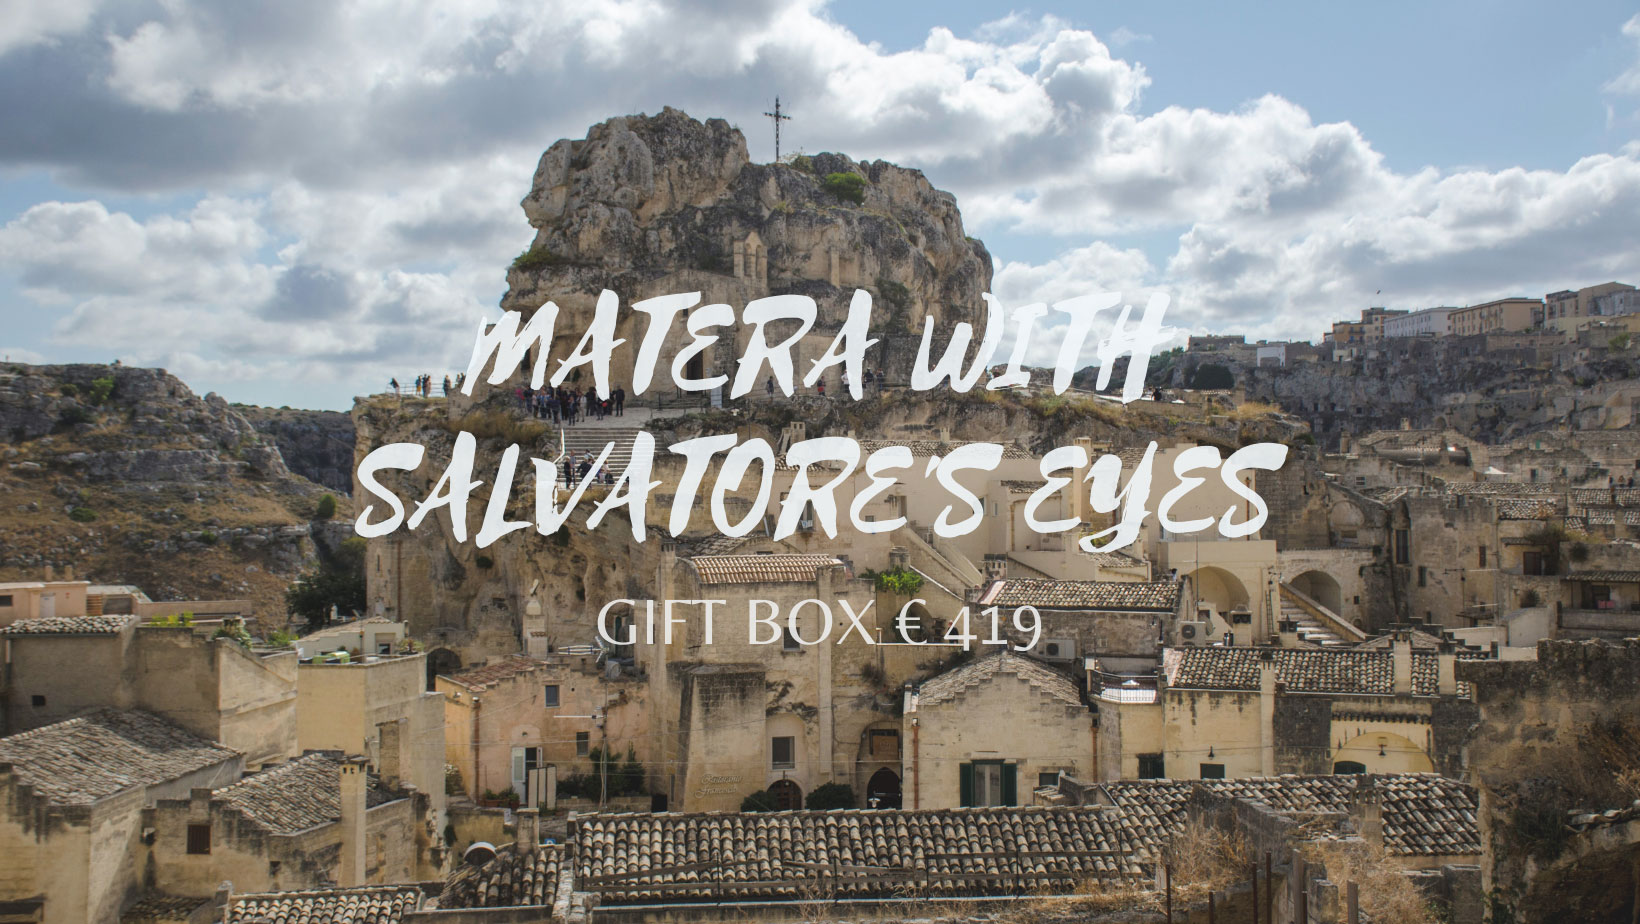 matera with Salvatore's eyes - giftbox